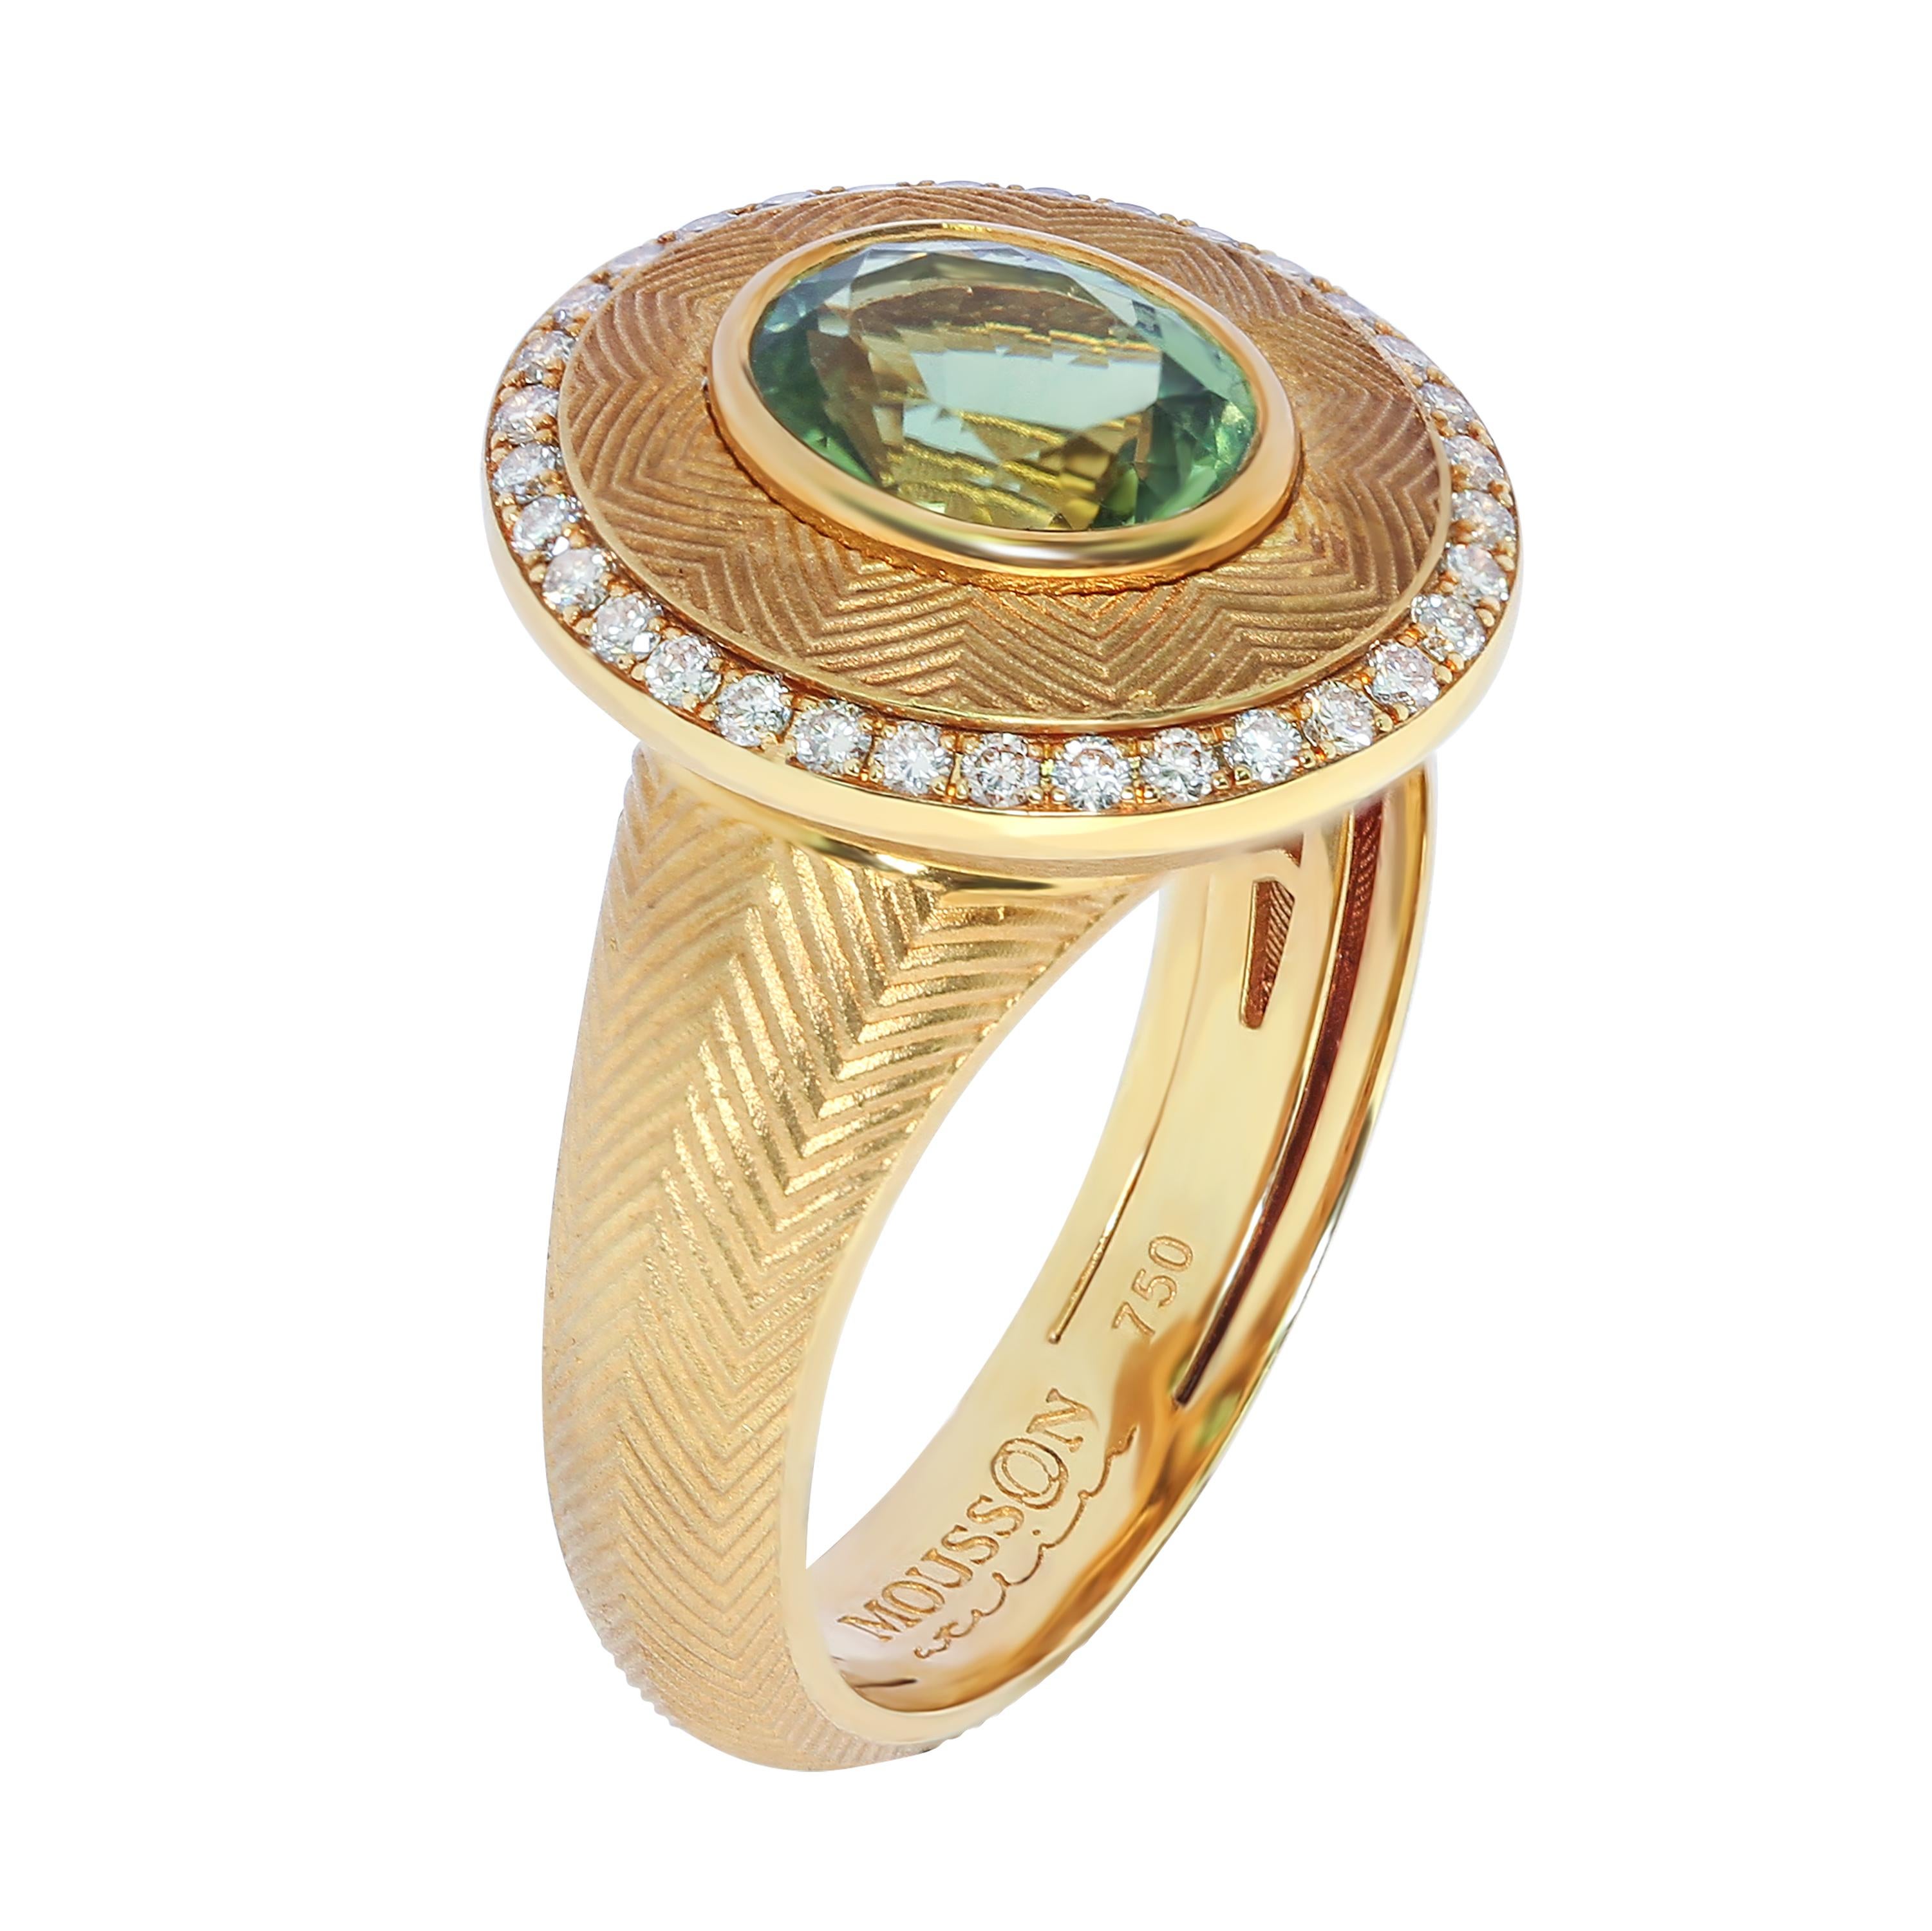 Green Tourmaline 1.70 Carat Champagne Diamonds 18 Karat Yellow Gold Tweed Ring
Our Trademark Texture 